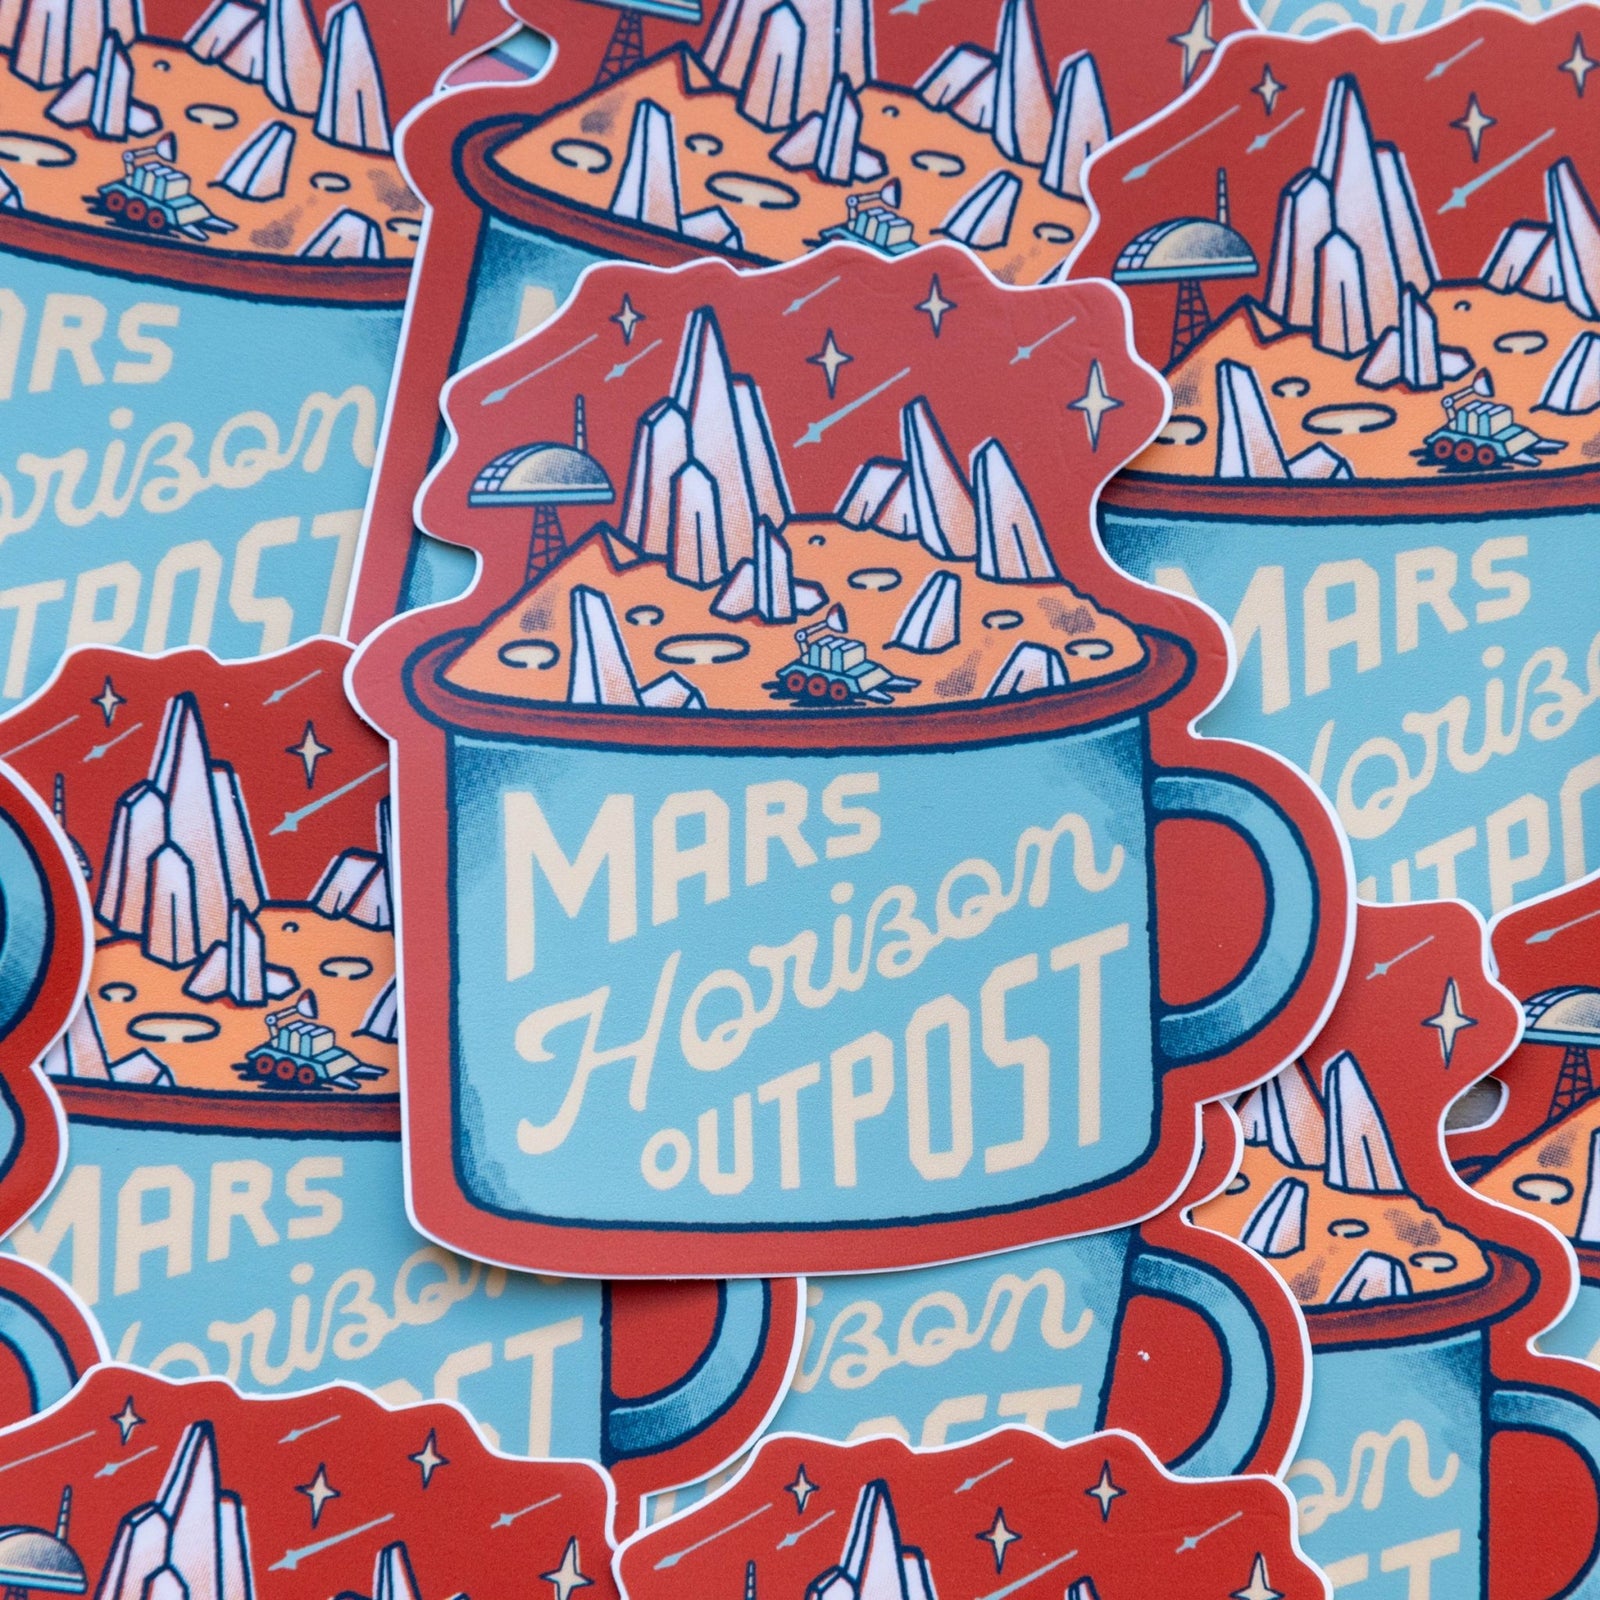 A Mars Horizon Outpost Mug - menottees